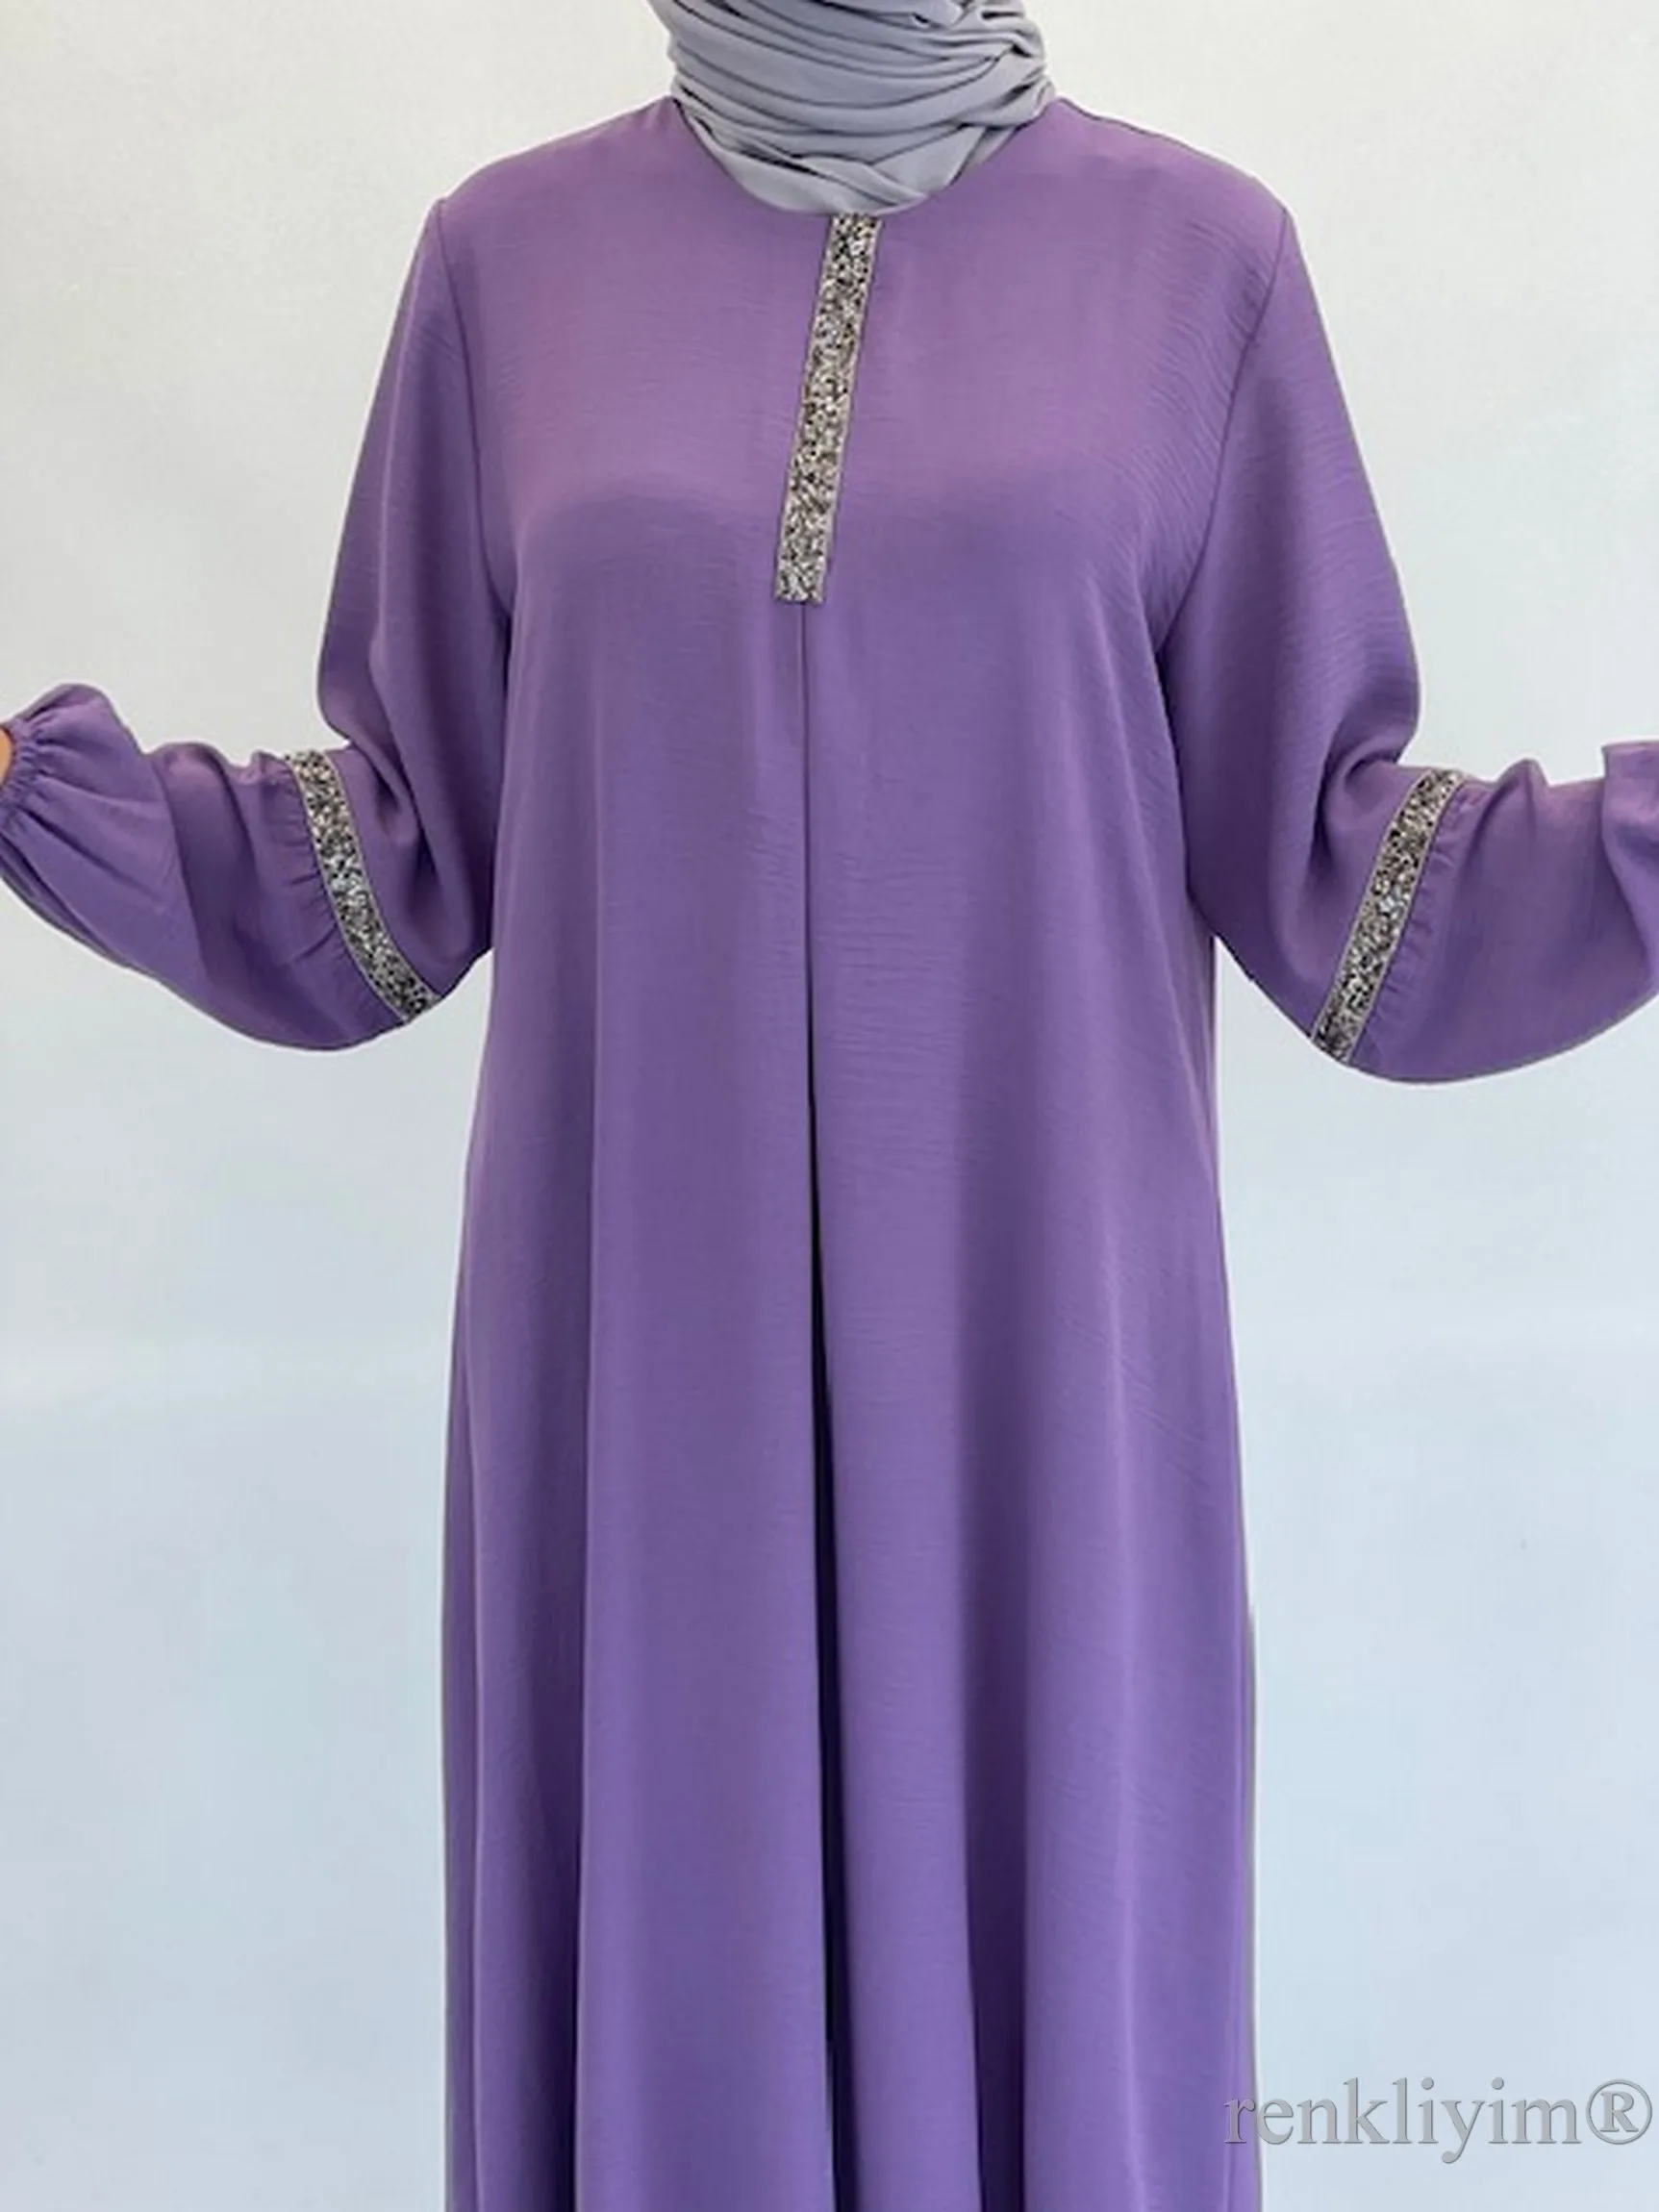 Turkish Dress Soft Aerobin Fabric Handles Long Pearl Stone Processing 2021 Hot Summer Season 145 cm long abaya